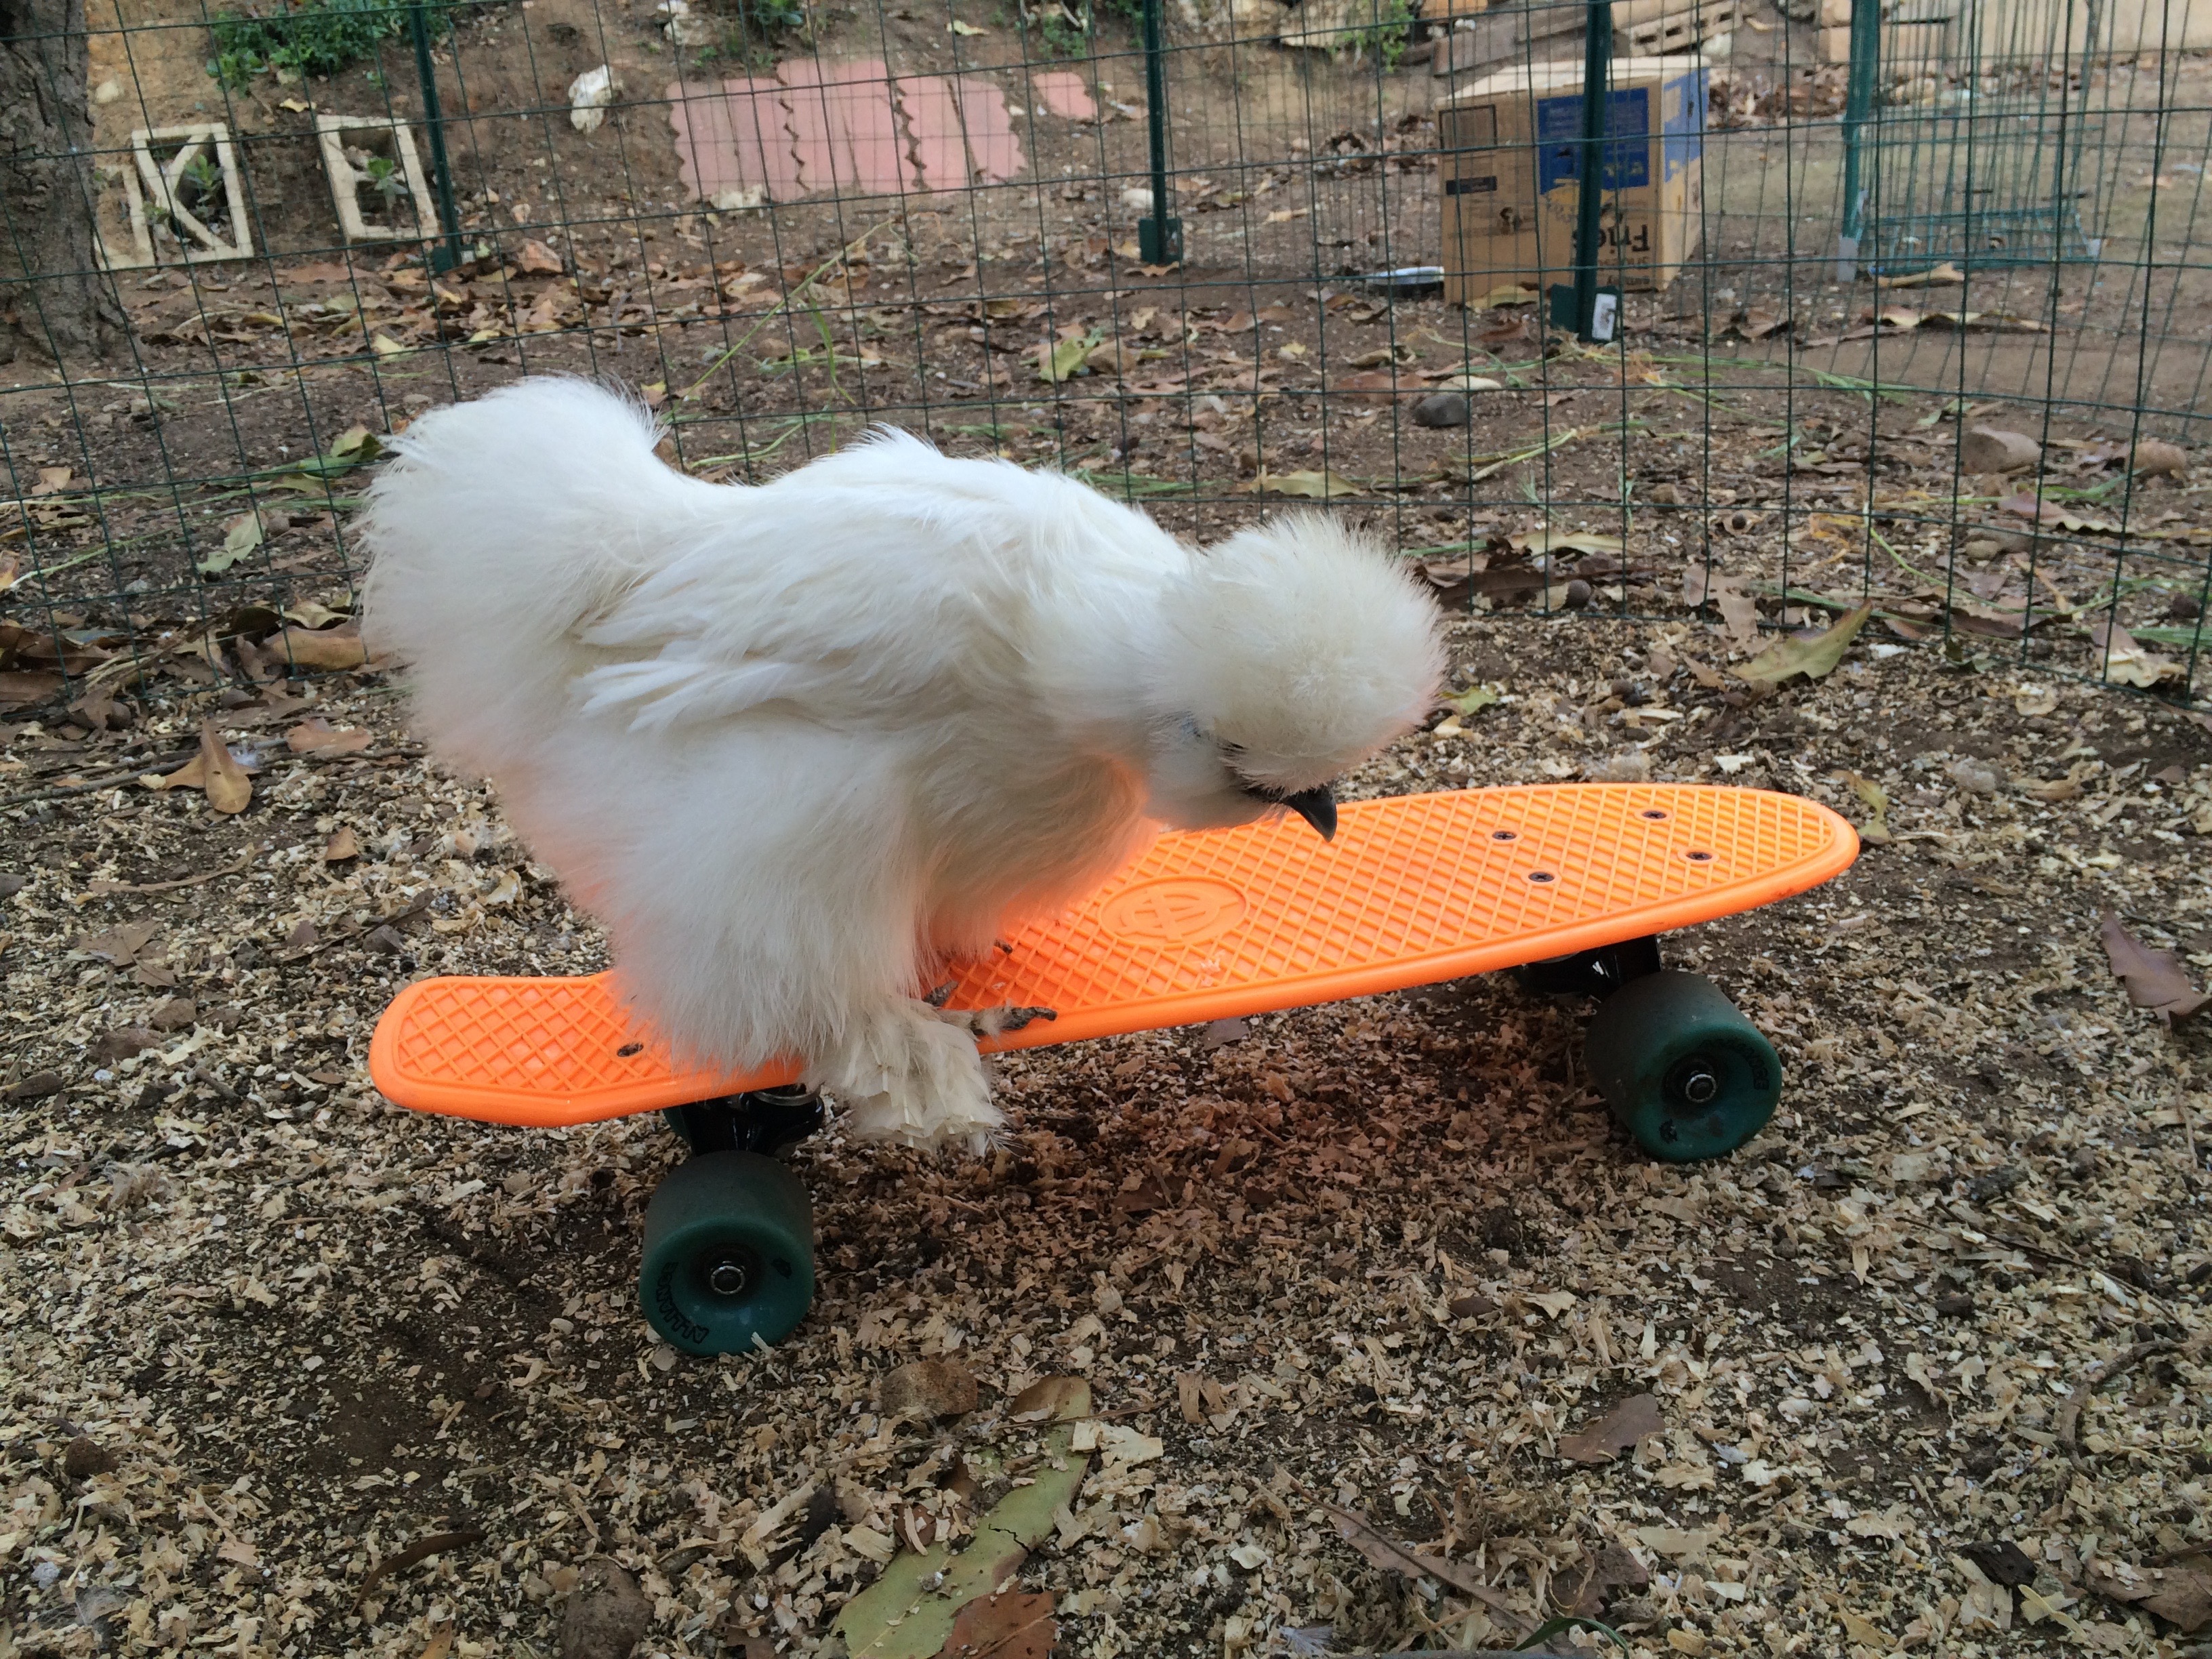 Silkie on a skateboard